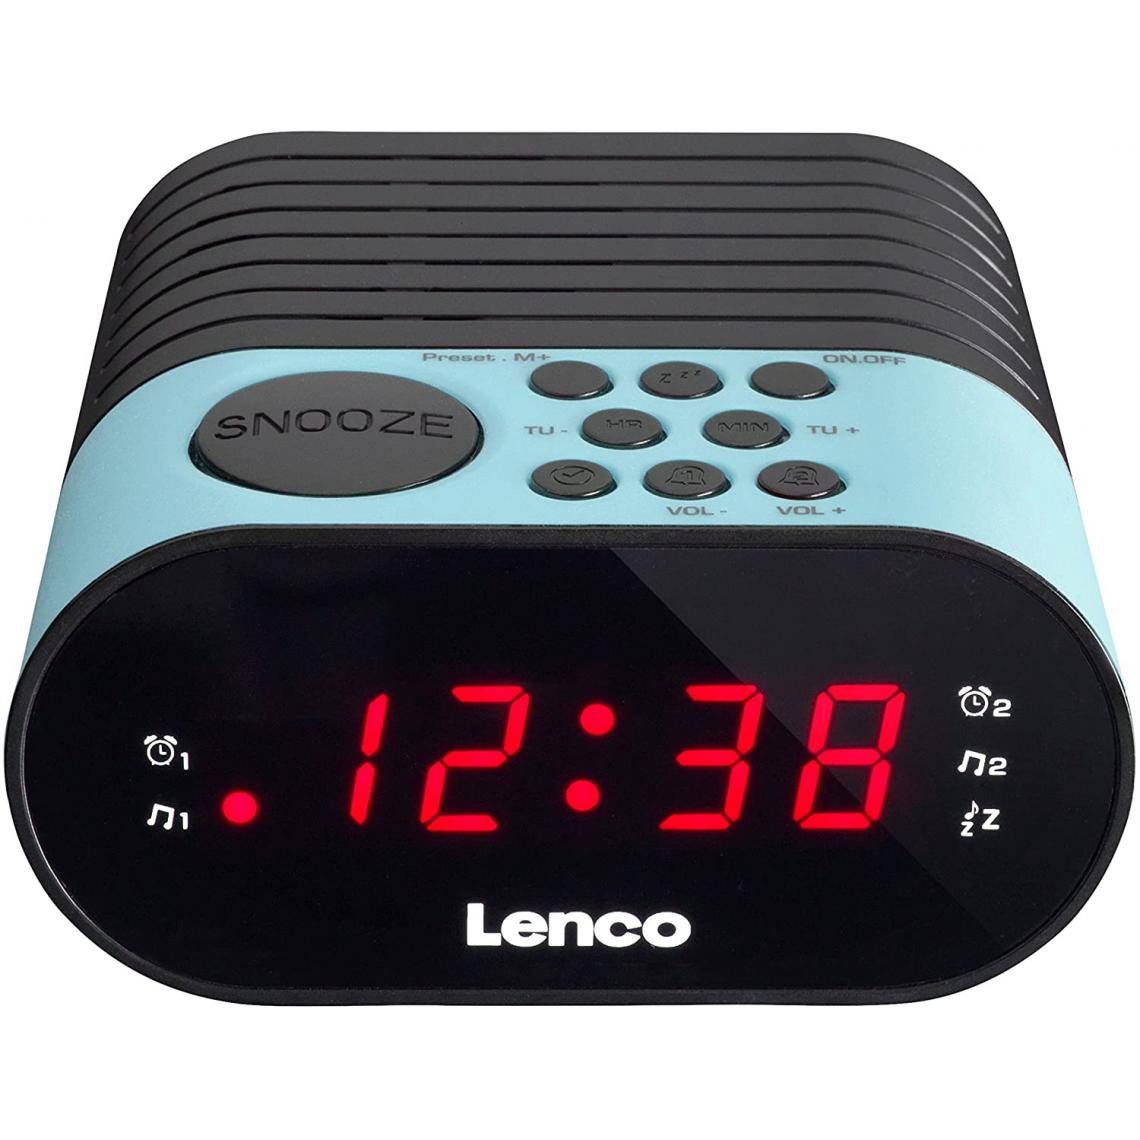 Lenco - radio réveil FM avec double alarme noir bleu - Radio